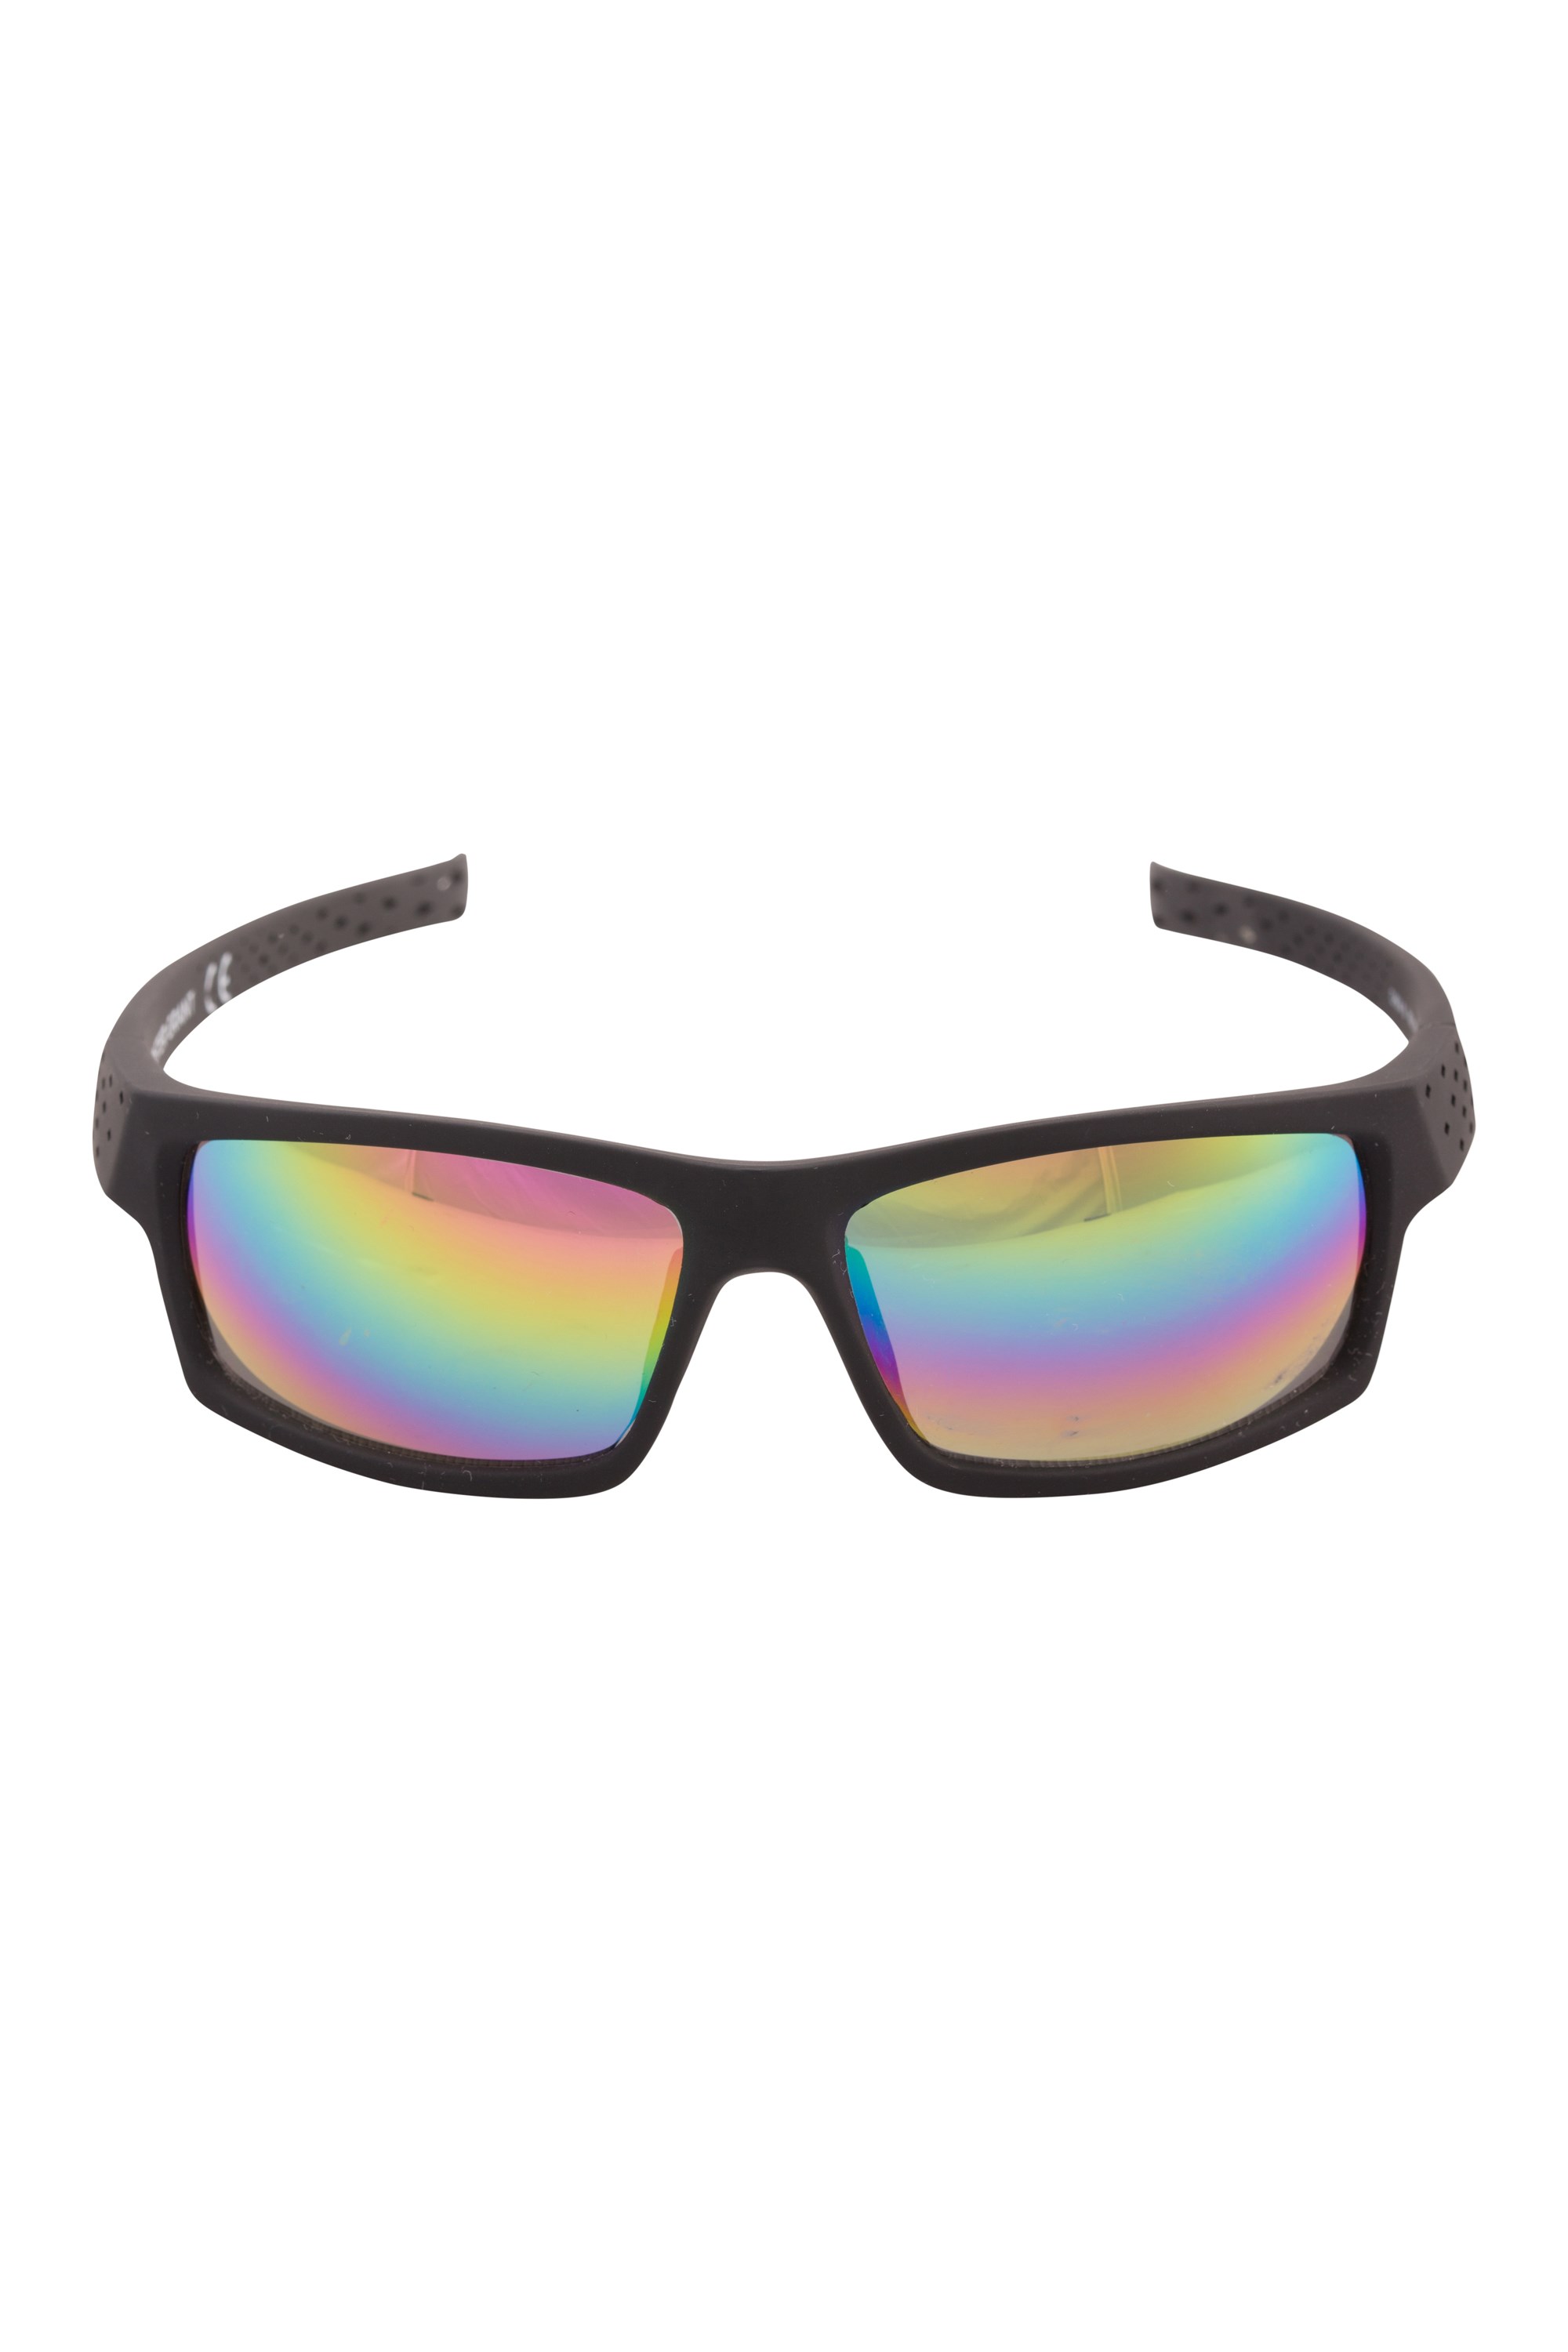 Mountain Warehouse Mountain Warehouse Sandymouth Womens Sunglasses Ladies UV400 Protection Lenses 